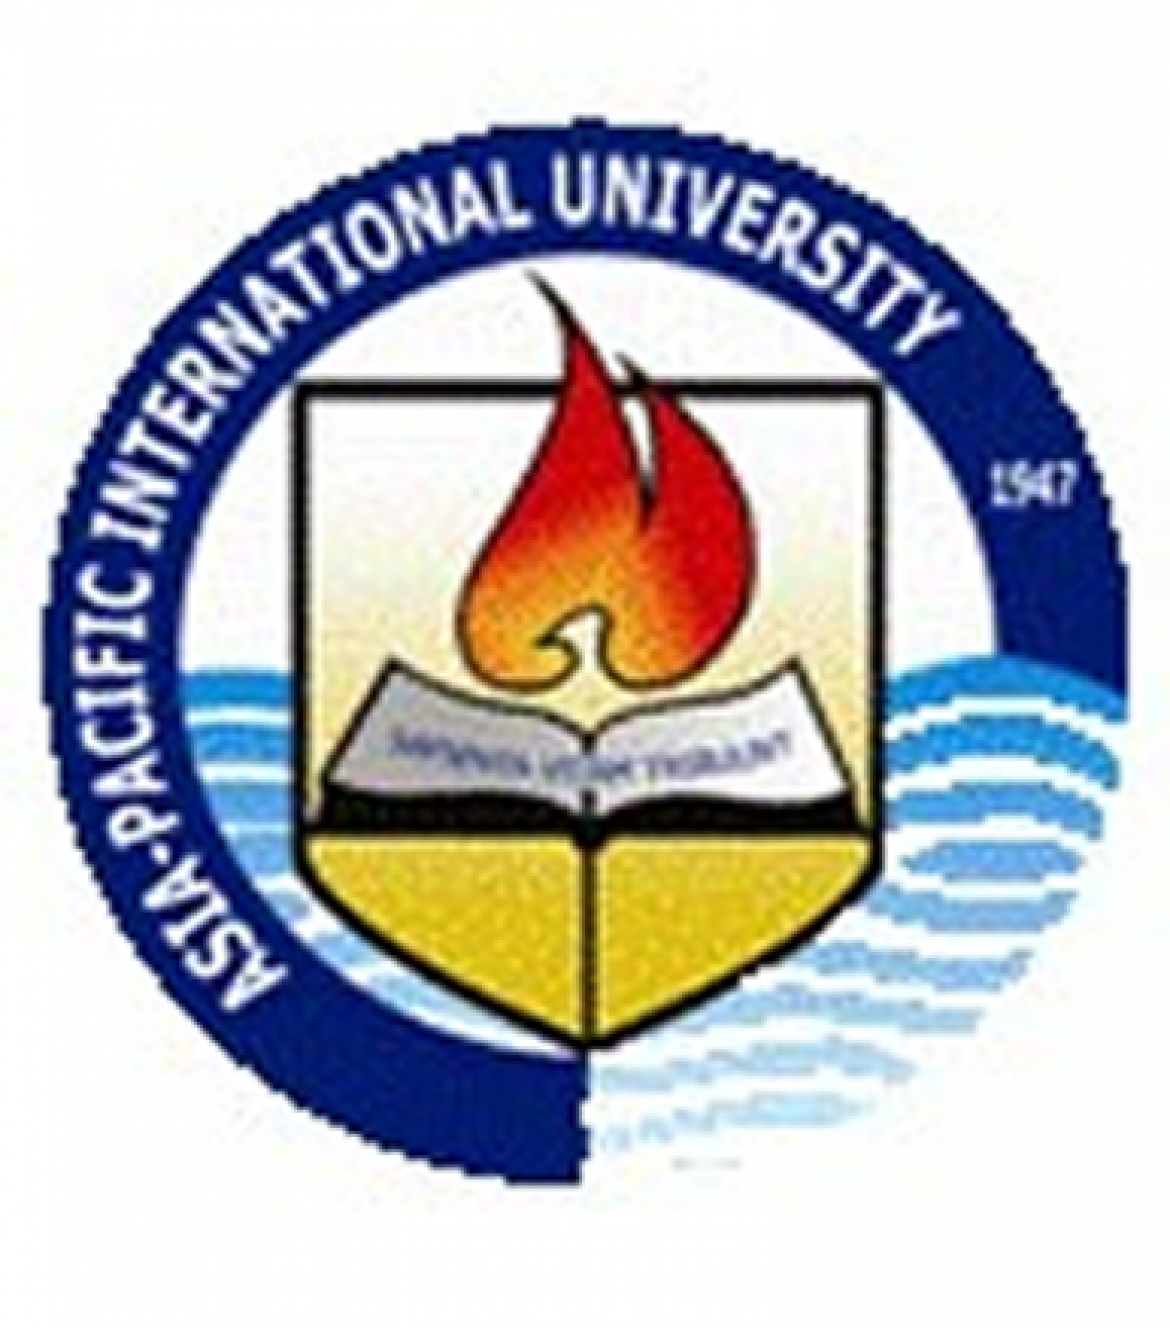 American Pacific International University